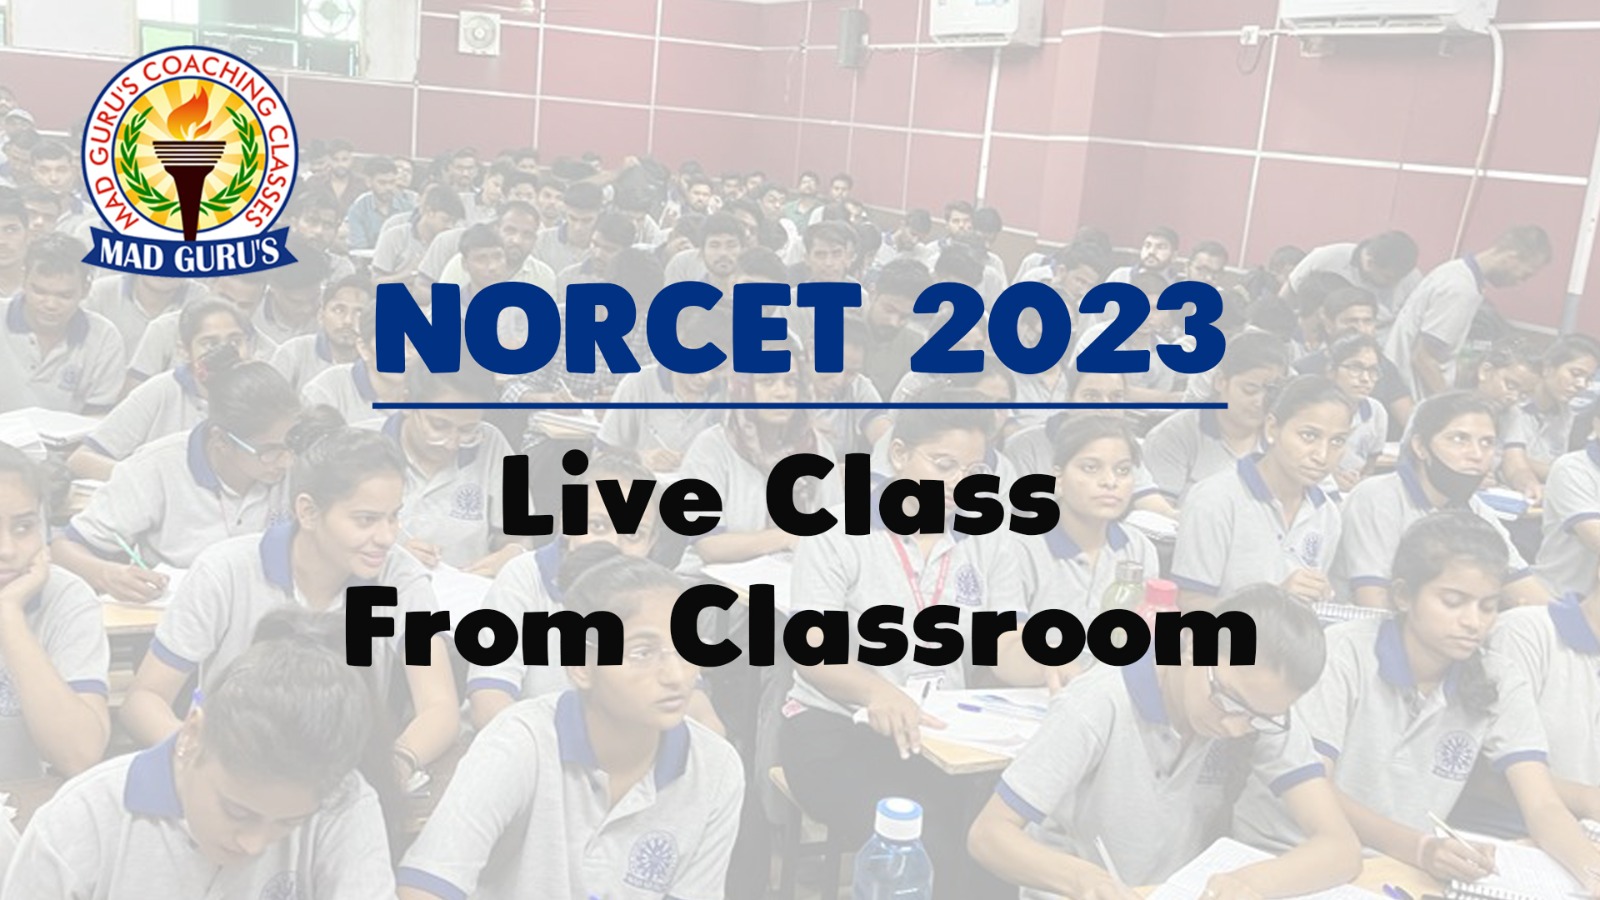 NORCET Membership - only 3600